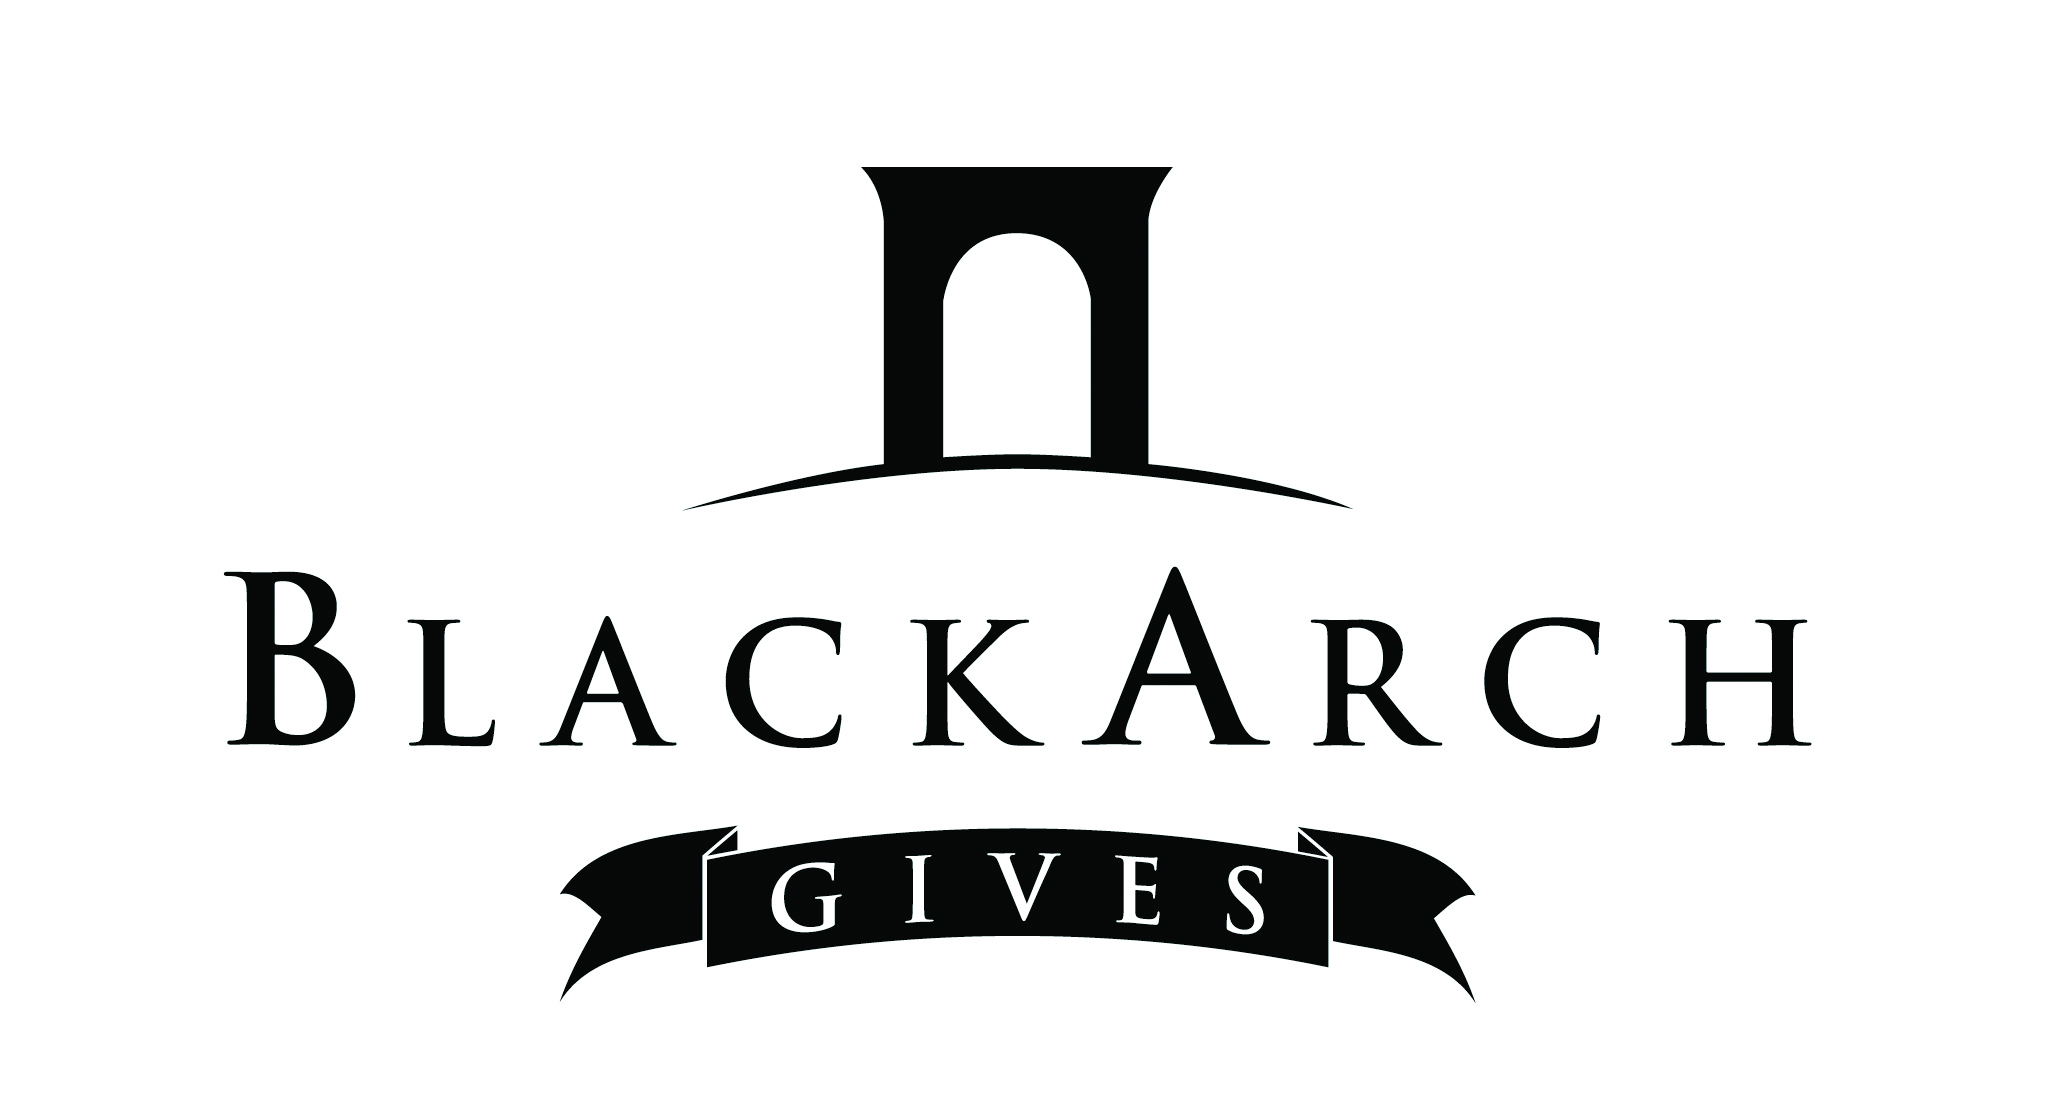 BlackArch_Gives_Black.jpg